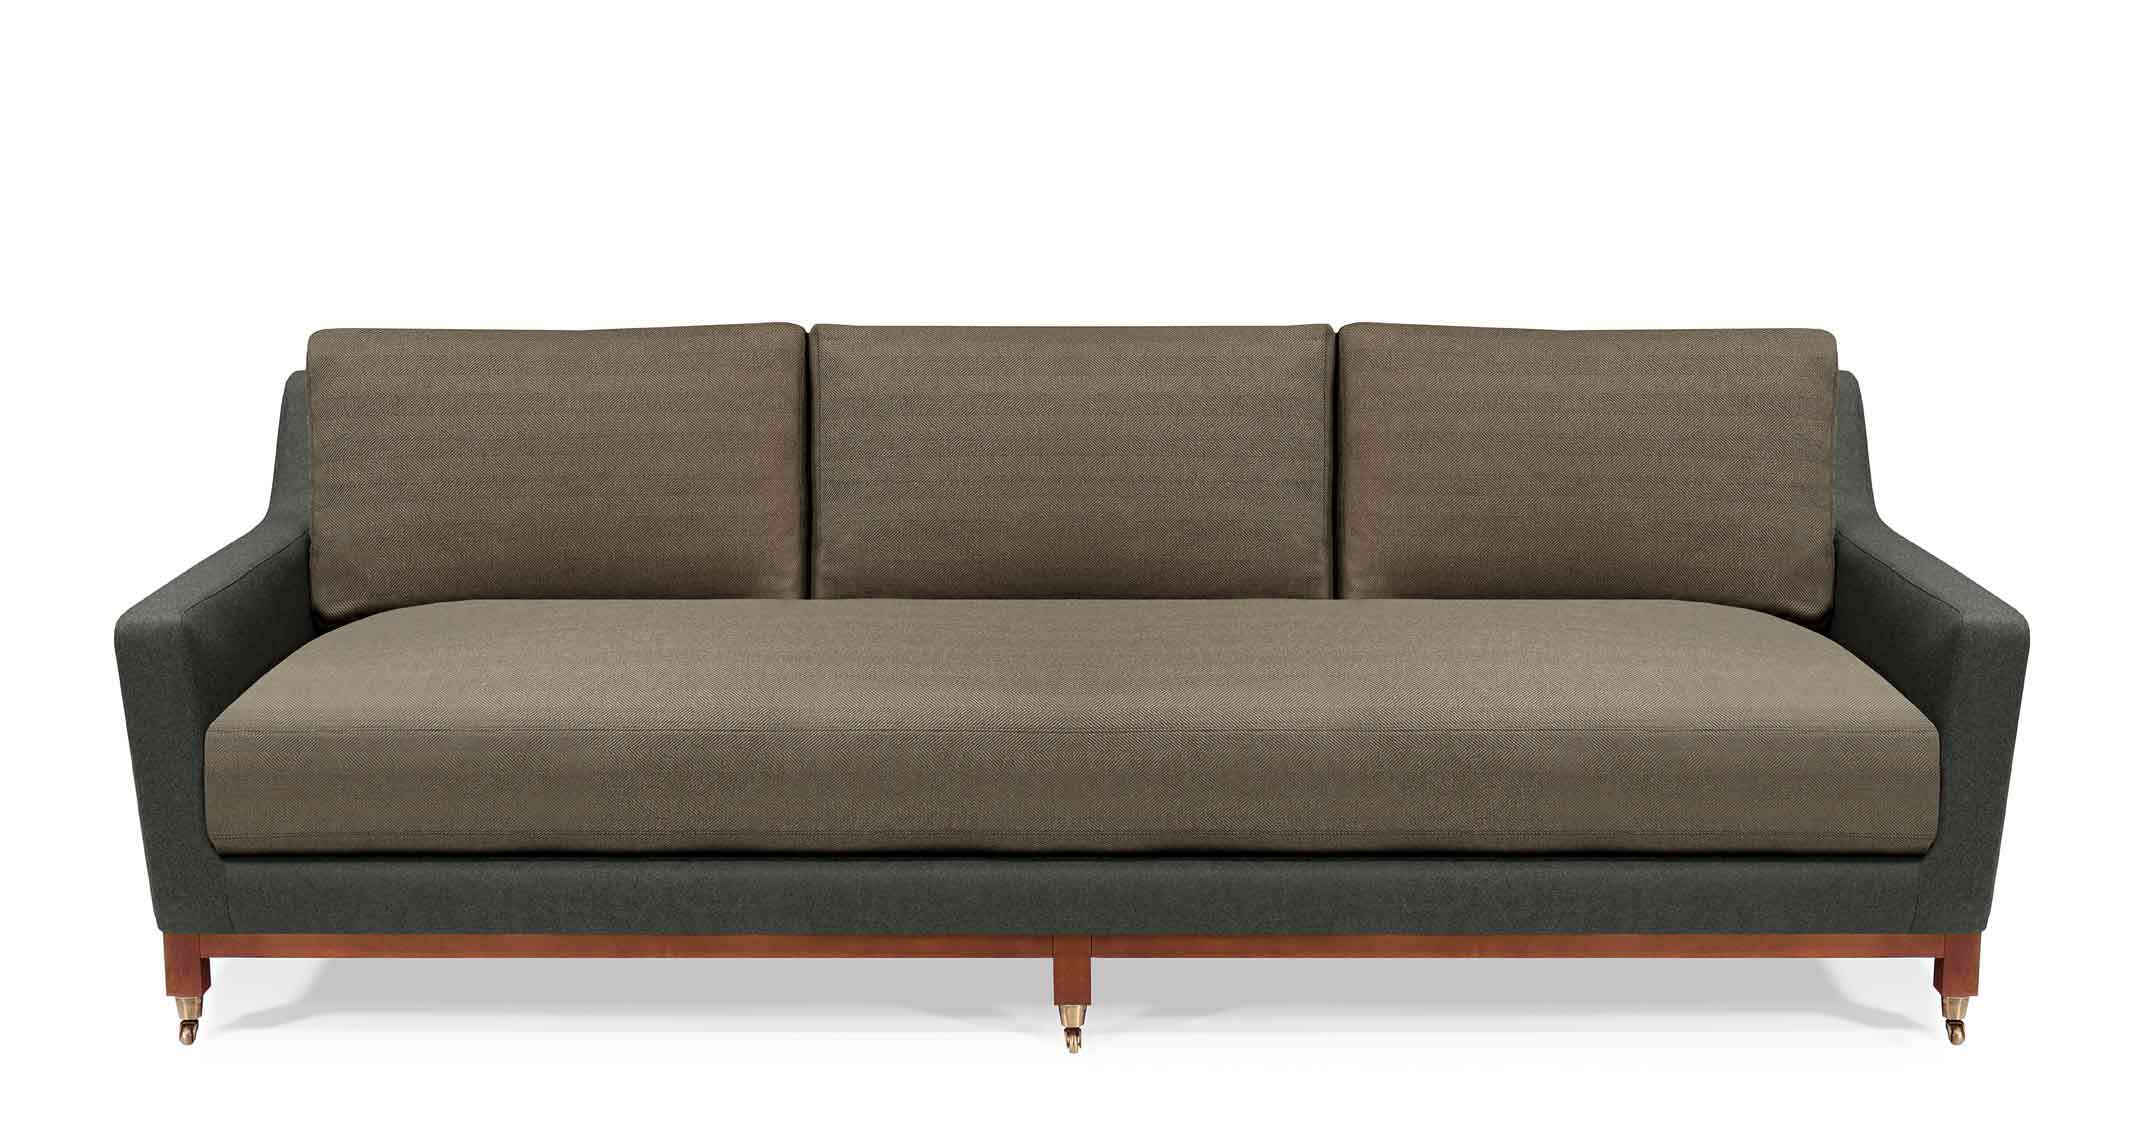 Classic sofa with a twist